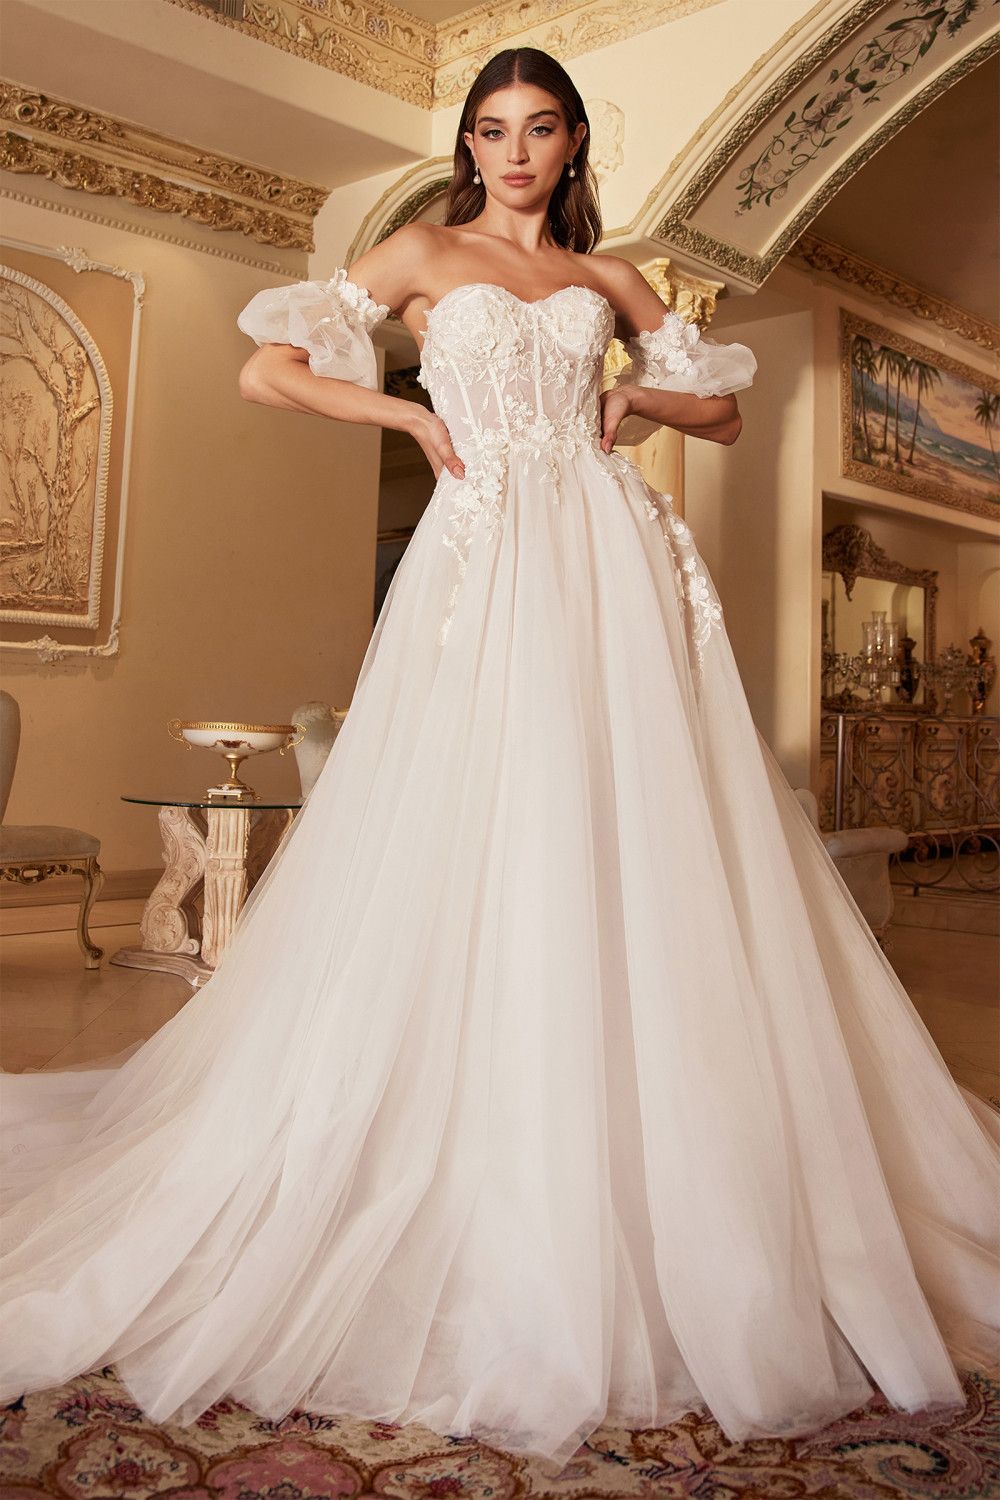 Strapless Wedding Dresses & Bridal Gowns - Princessly